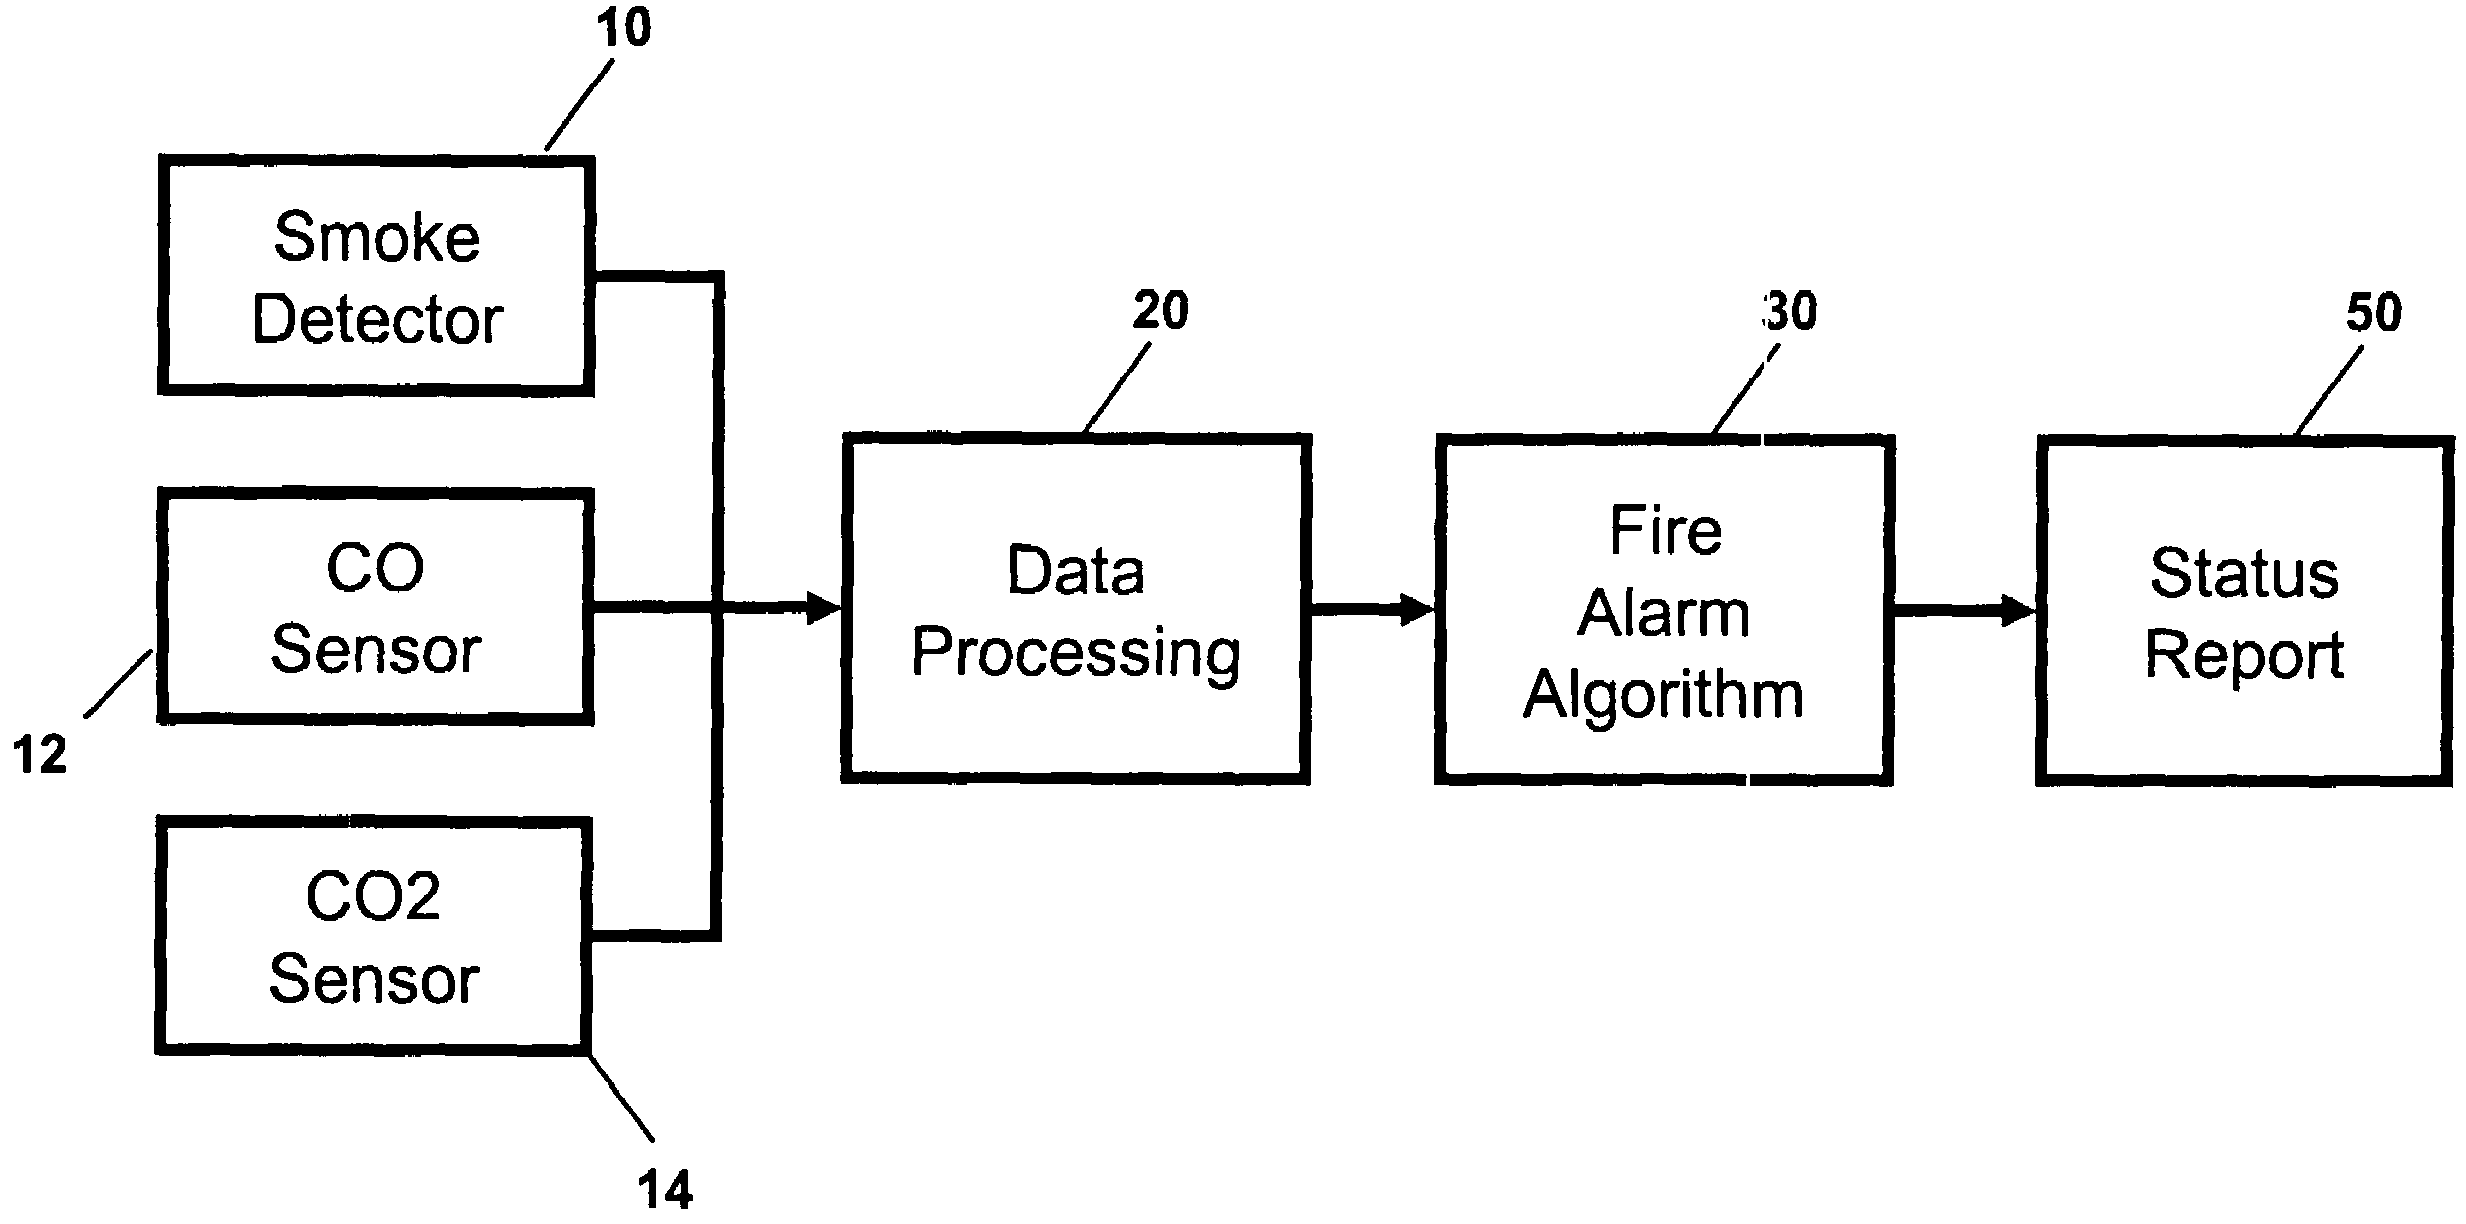 Fire alarm algorithm using smoke and gas sensors